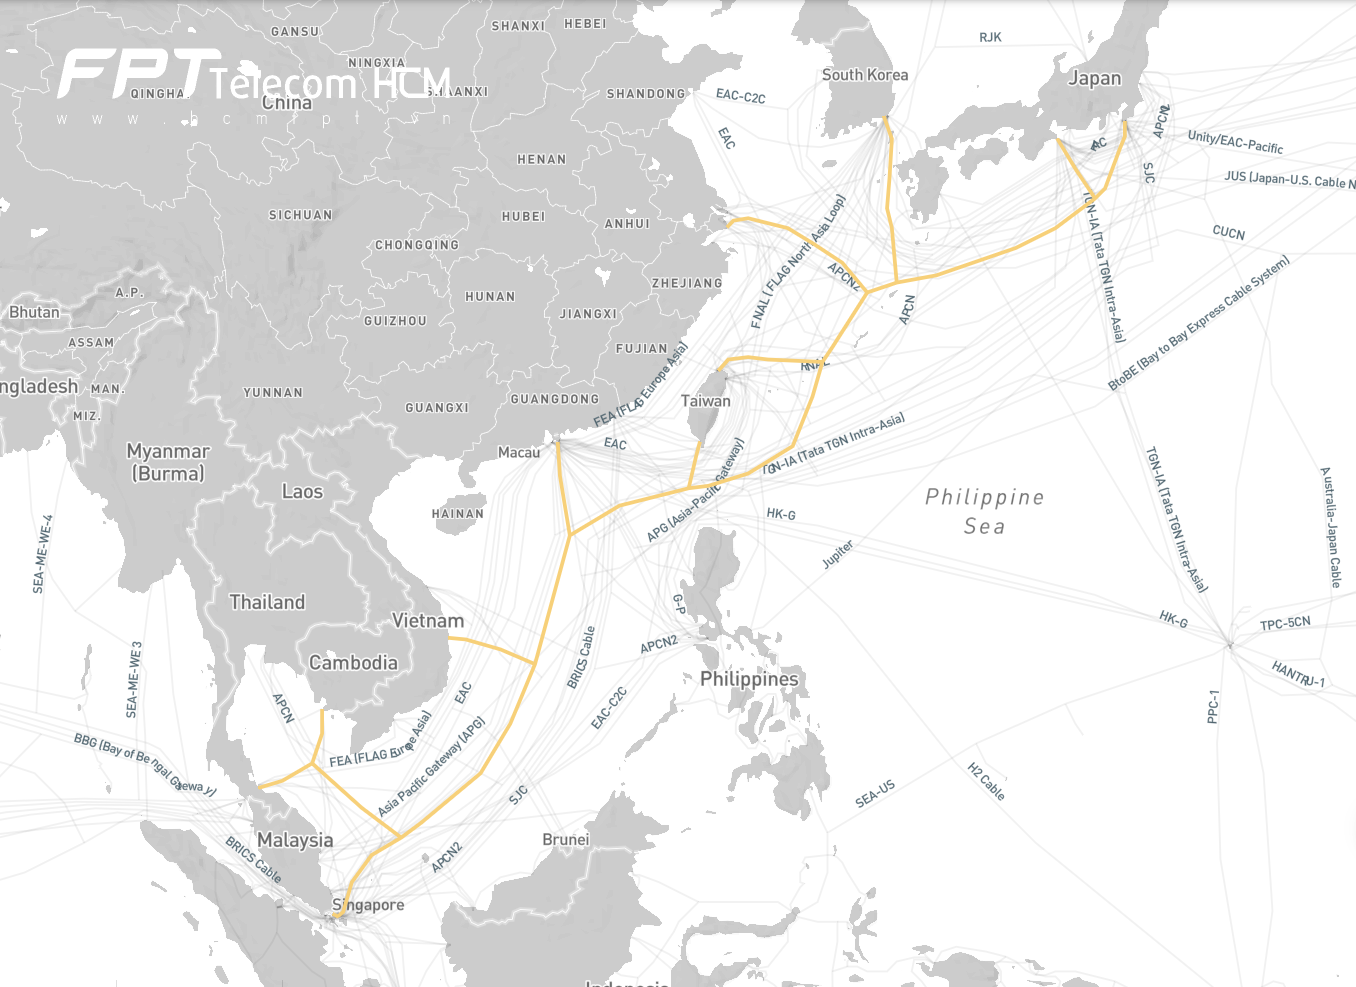 Cáp quang biển SJC2 (Southeast Asia-Japan Cable 2)